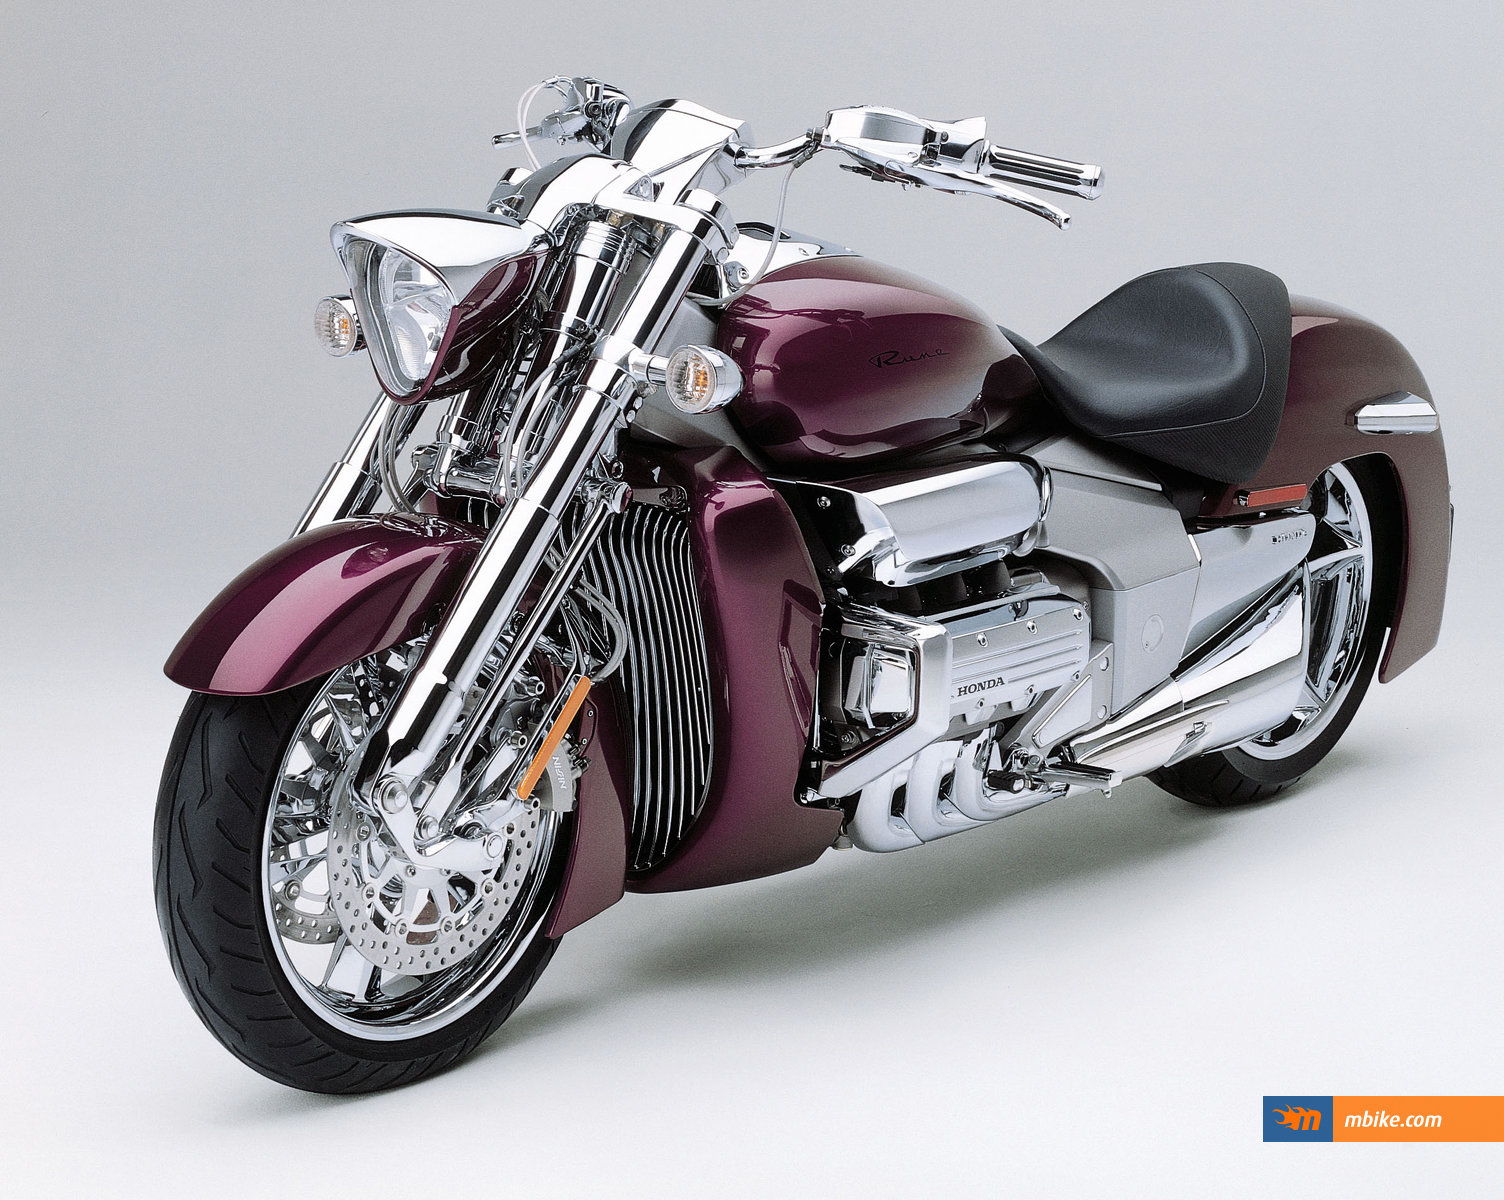 2004 Honda Valkyrie Rune - Honda New Bike Price In India , HD Wallpaper & Backgrounds